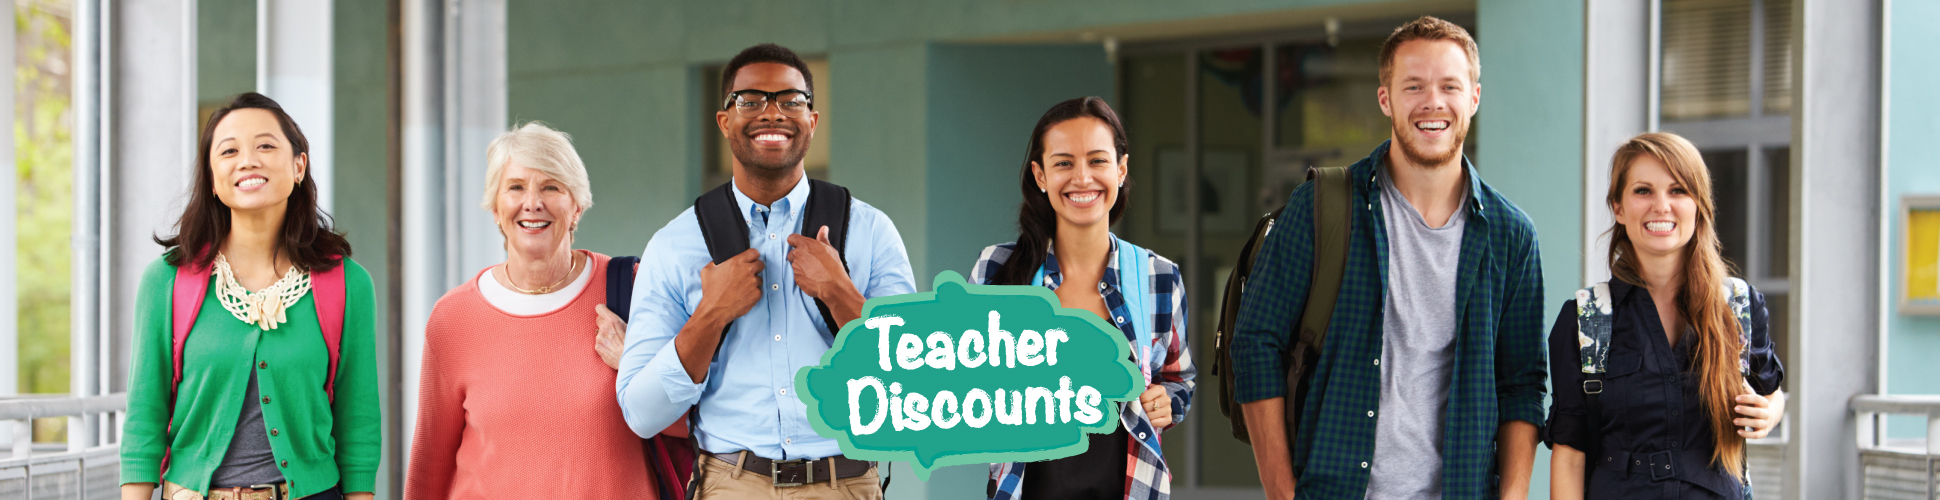 Teacher Discounts: 160 Places to Get a Discount